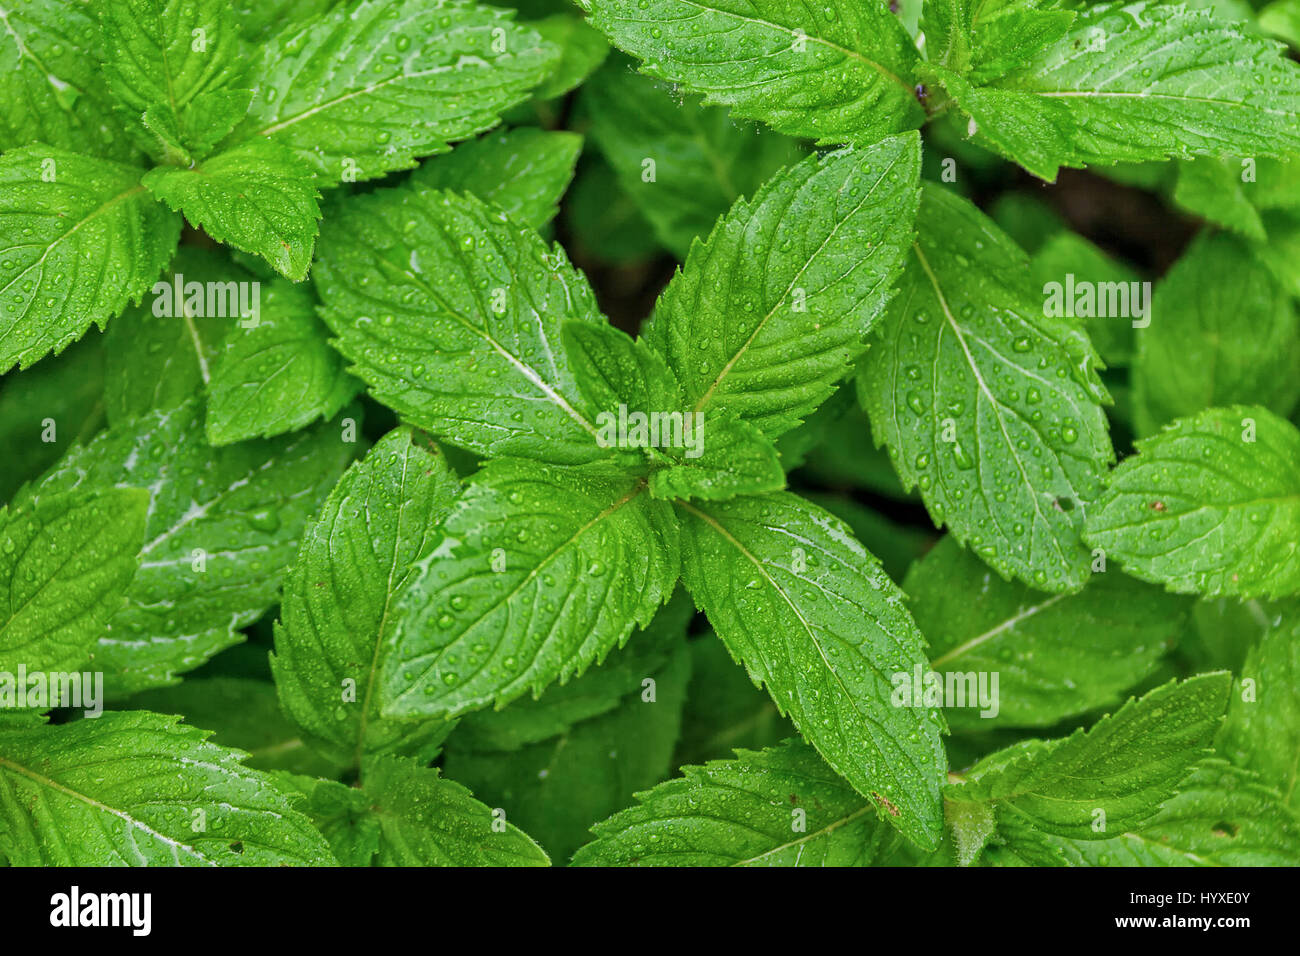 Mint leaves, dew drops, closeup image, top view, selective focus Stock Photo